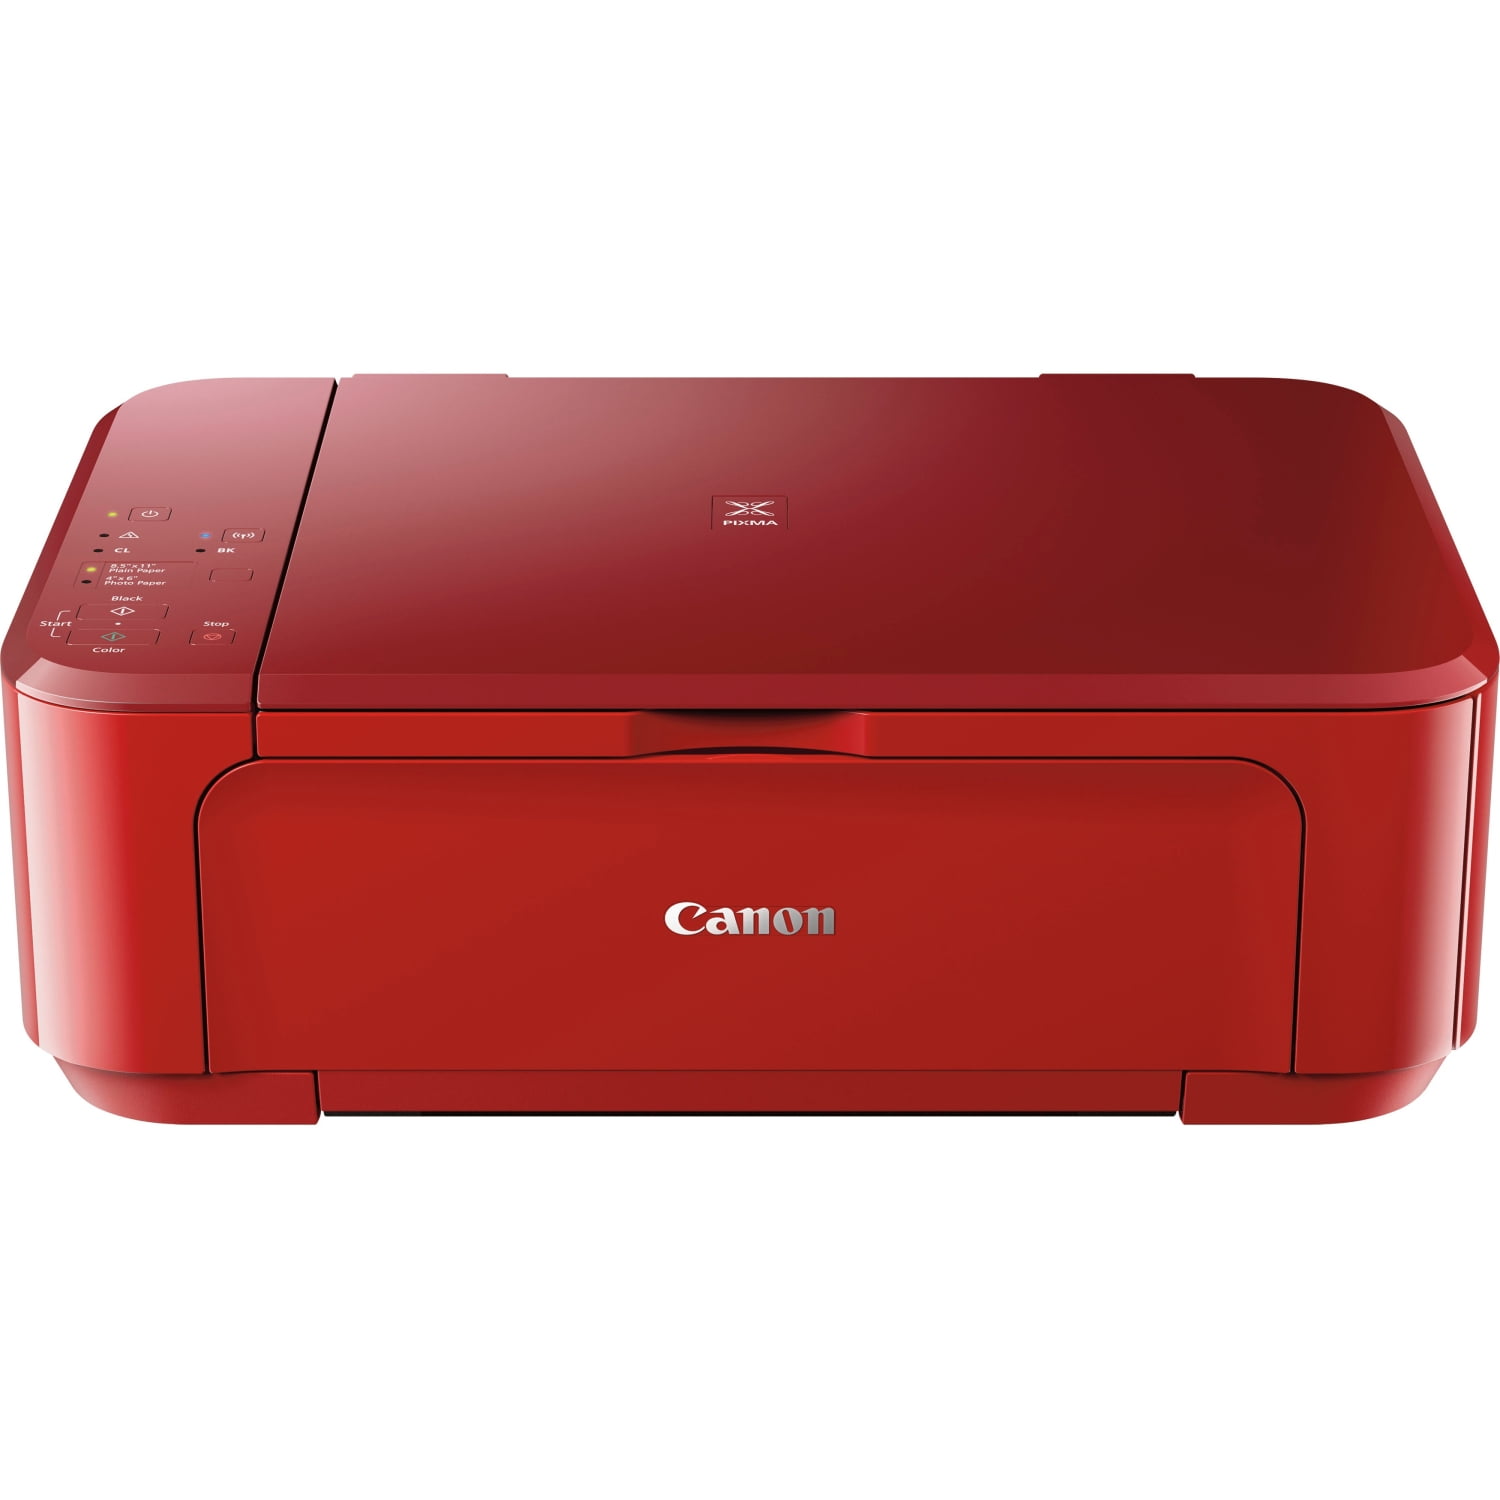 Hr aktivitet Porto Canon PIXMA MG3620 Inkjet Multifunction Wireless 3-in-1 (Print/Copy/Scan)  Color Printer, Red - Walmart.com